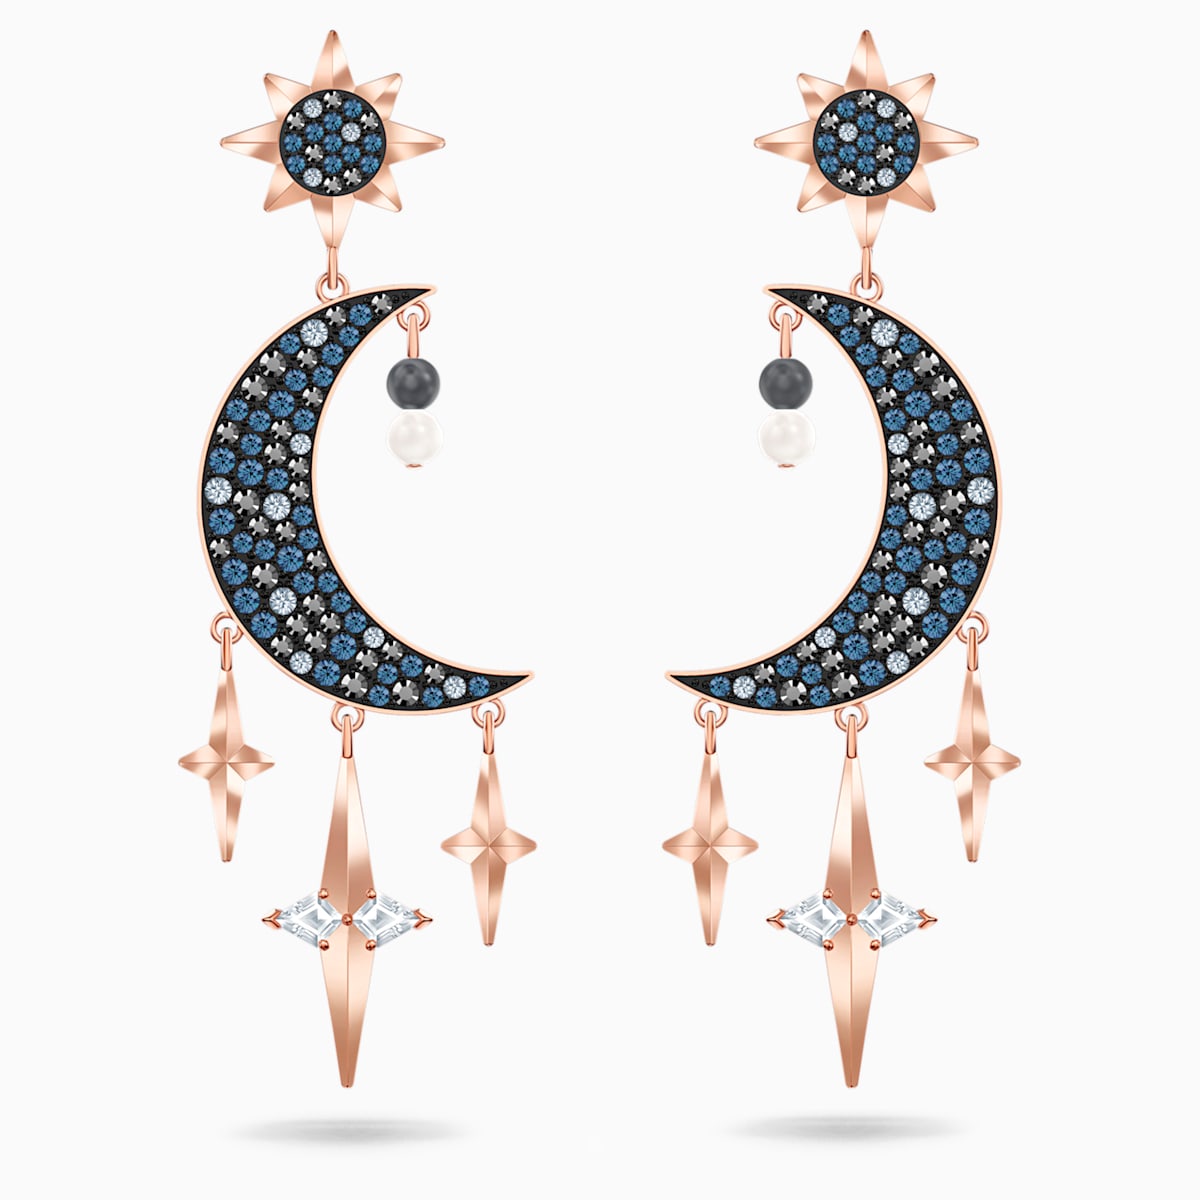 Swarovski Symbolic Pierced Earrings, Multi-colored, Mixed metal finish - Swarovski, 5489536